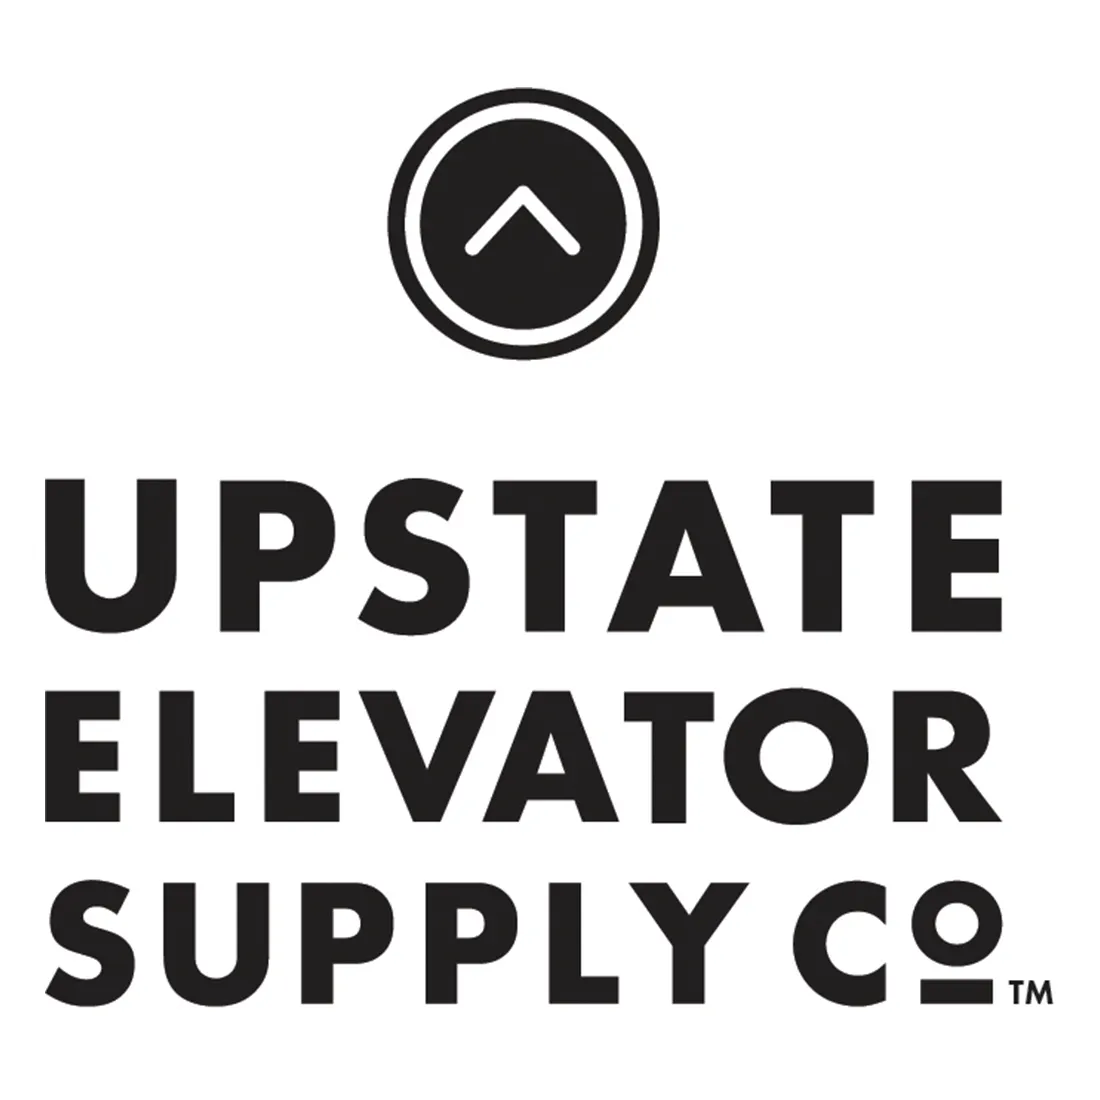 upstate elevator supply co logo